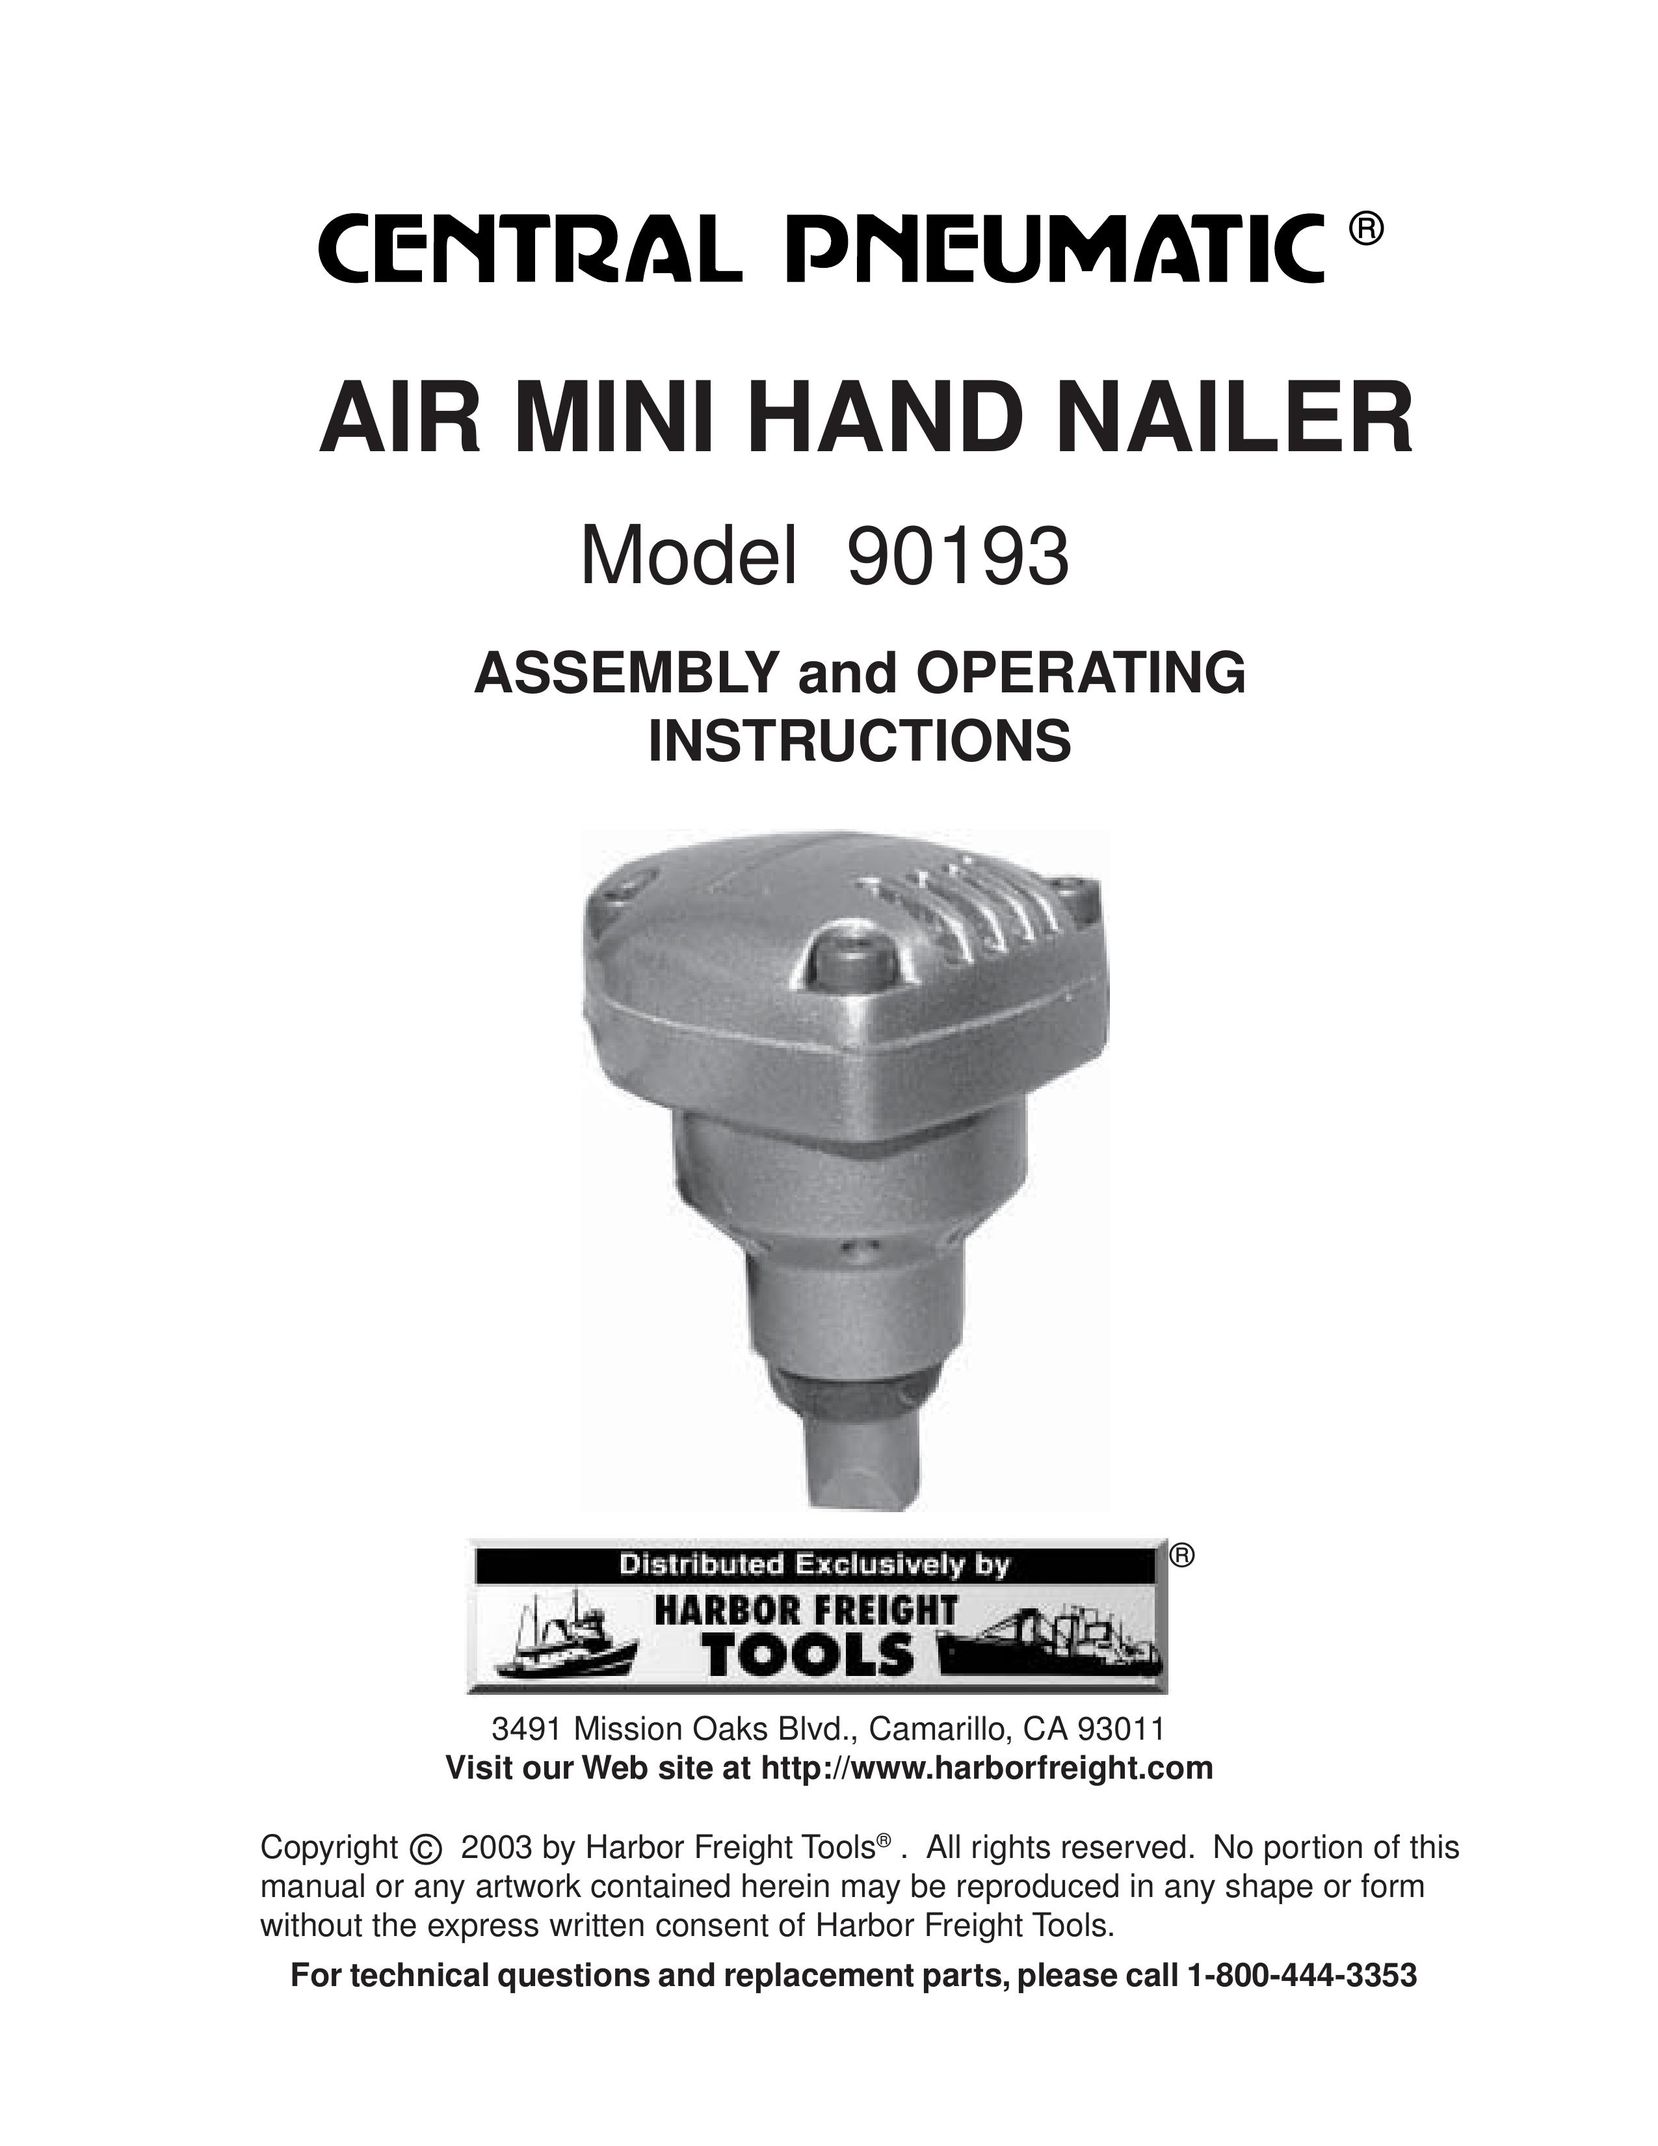 Harbor Freight Tools 90193 Nail Gun User Manual